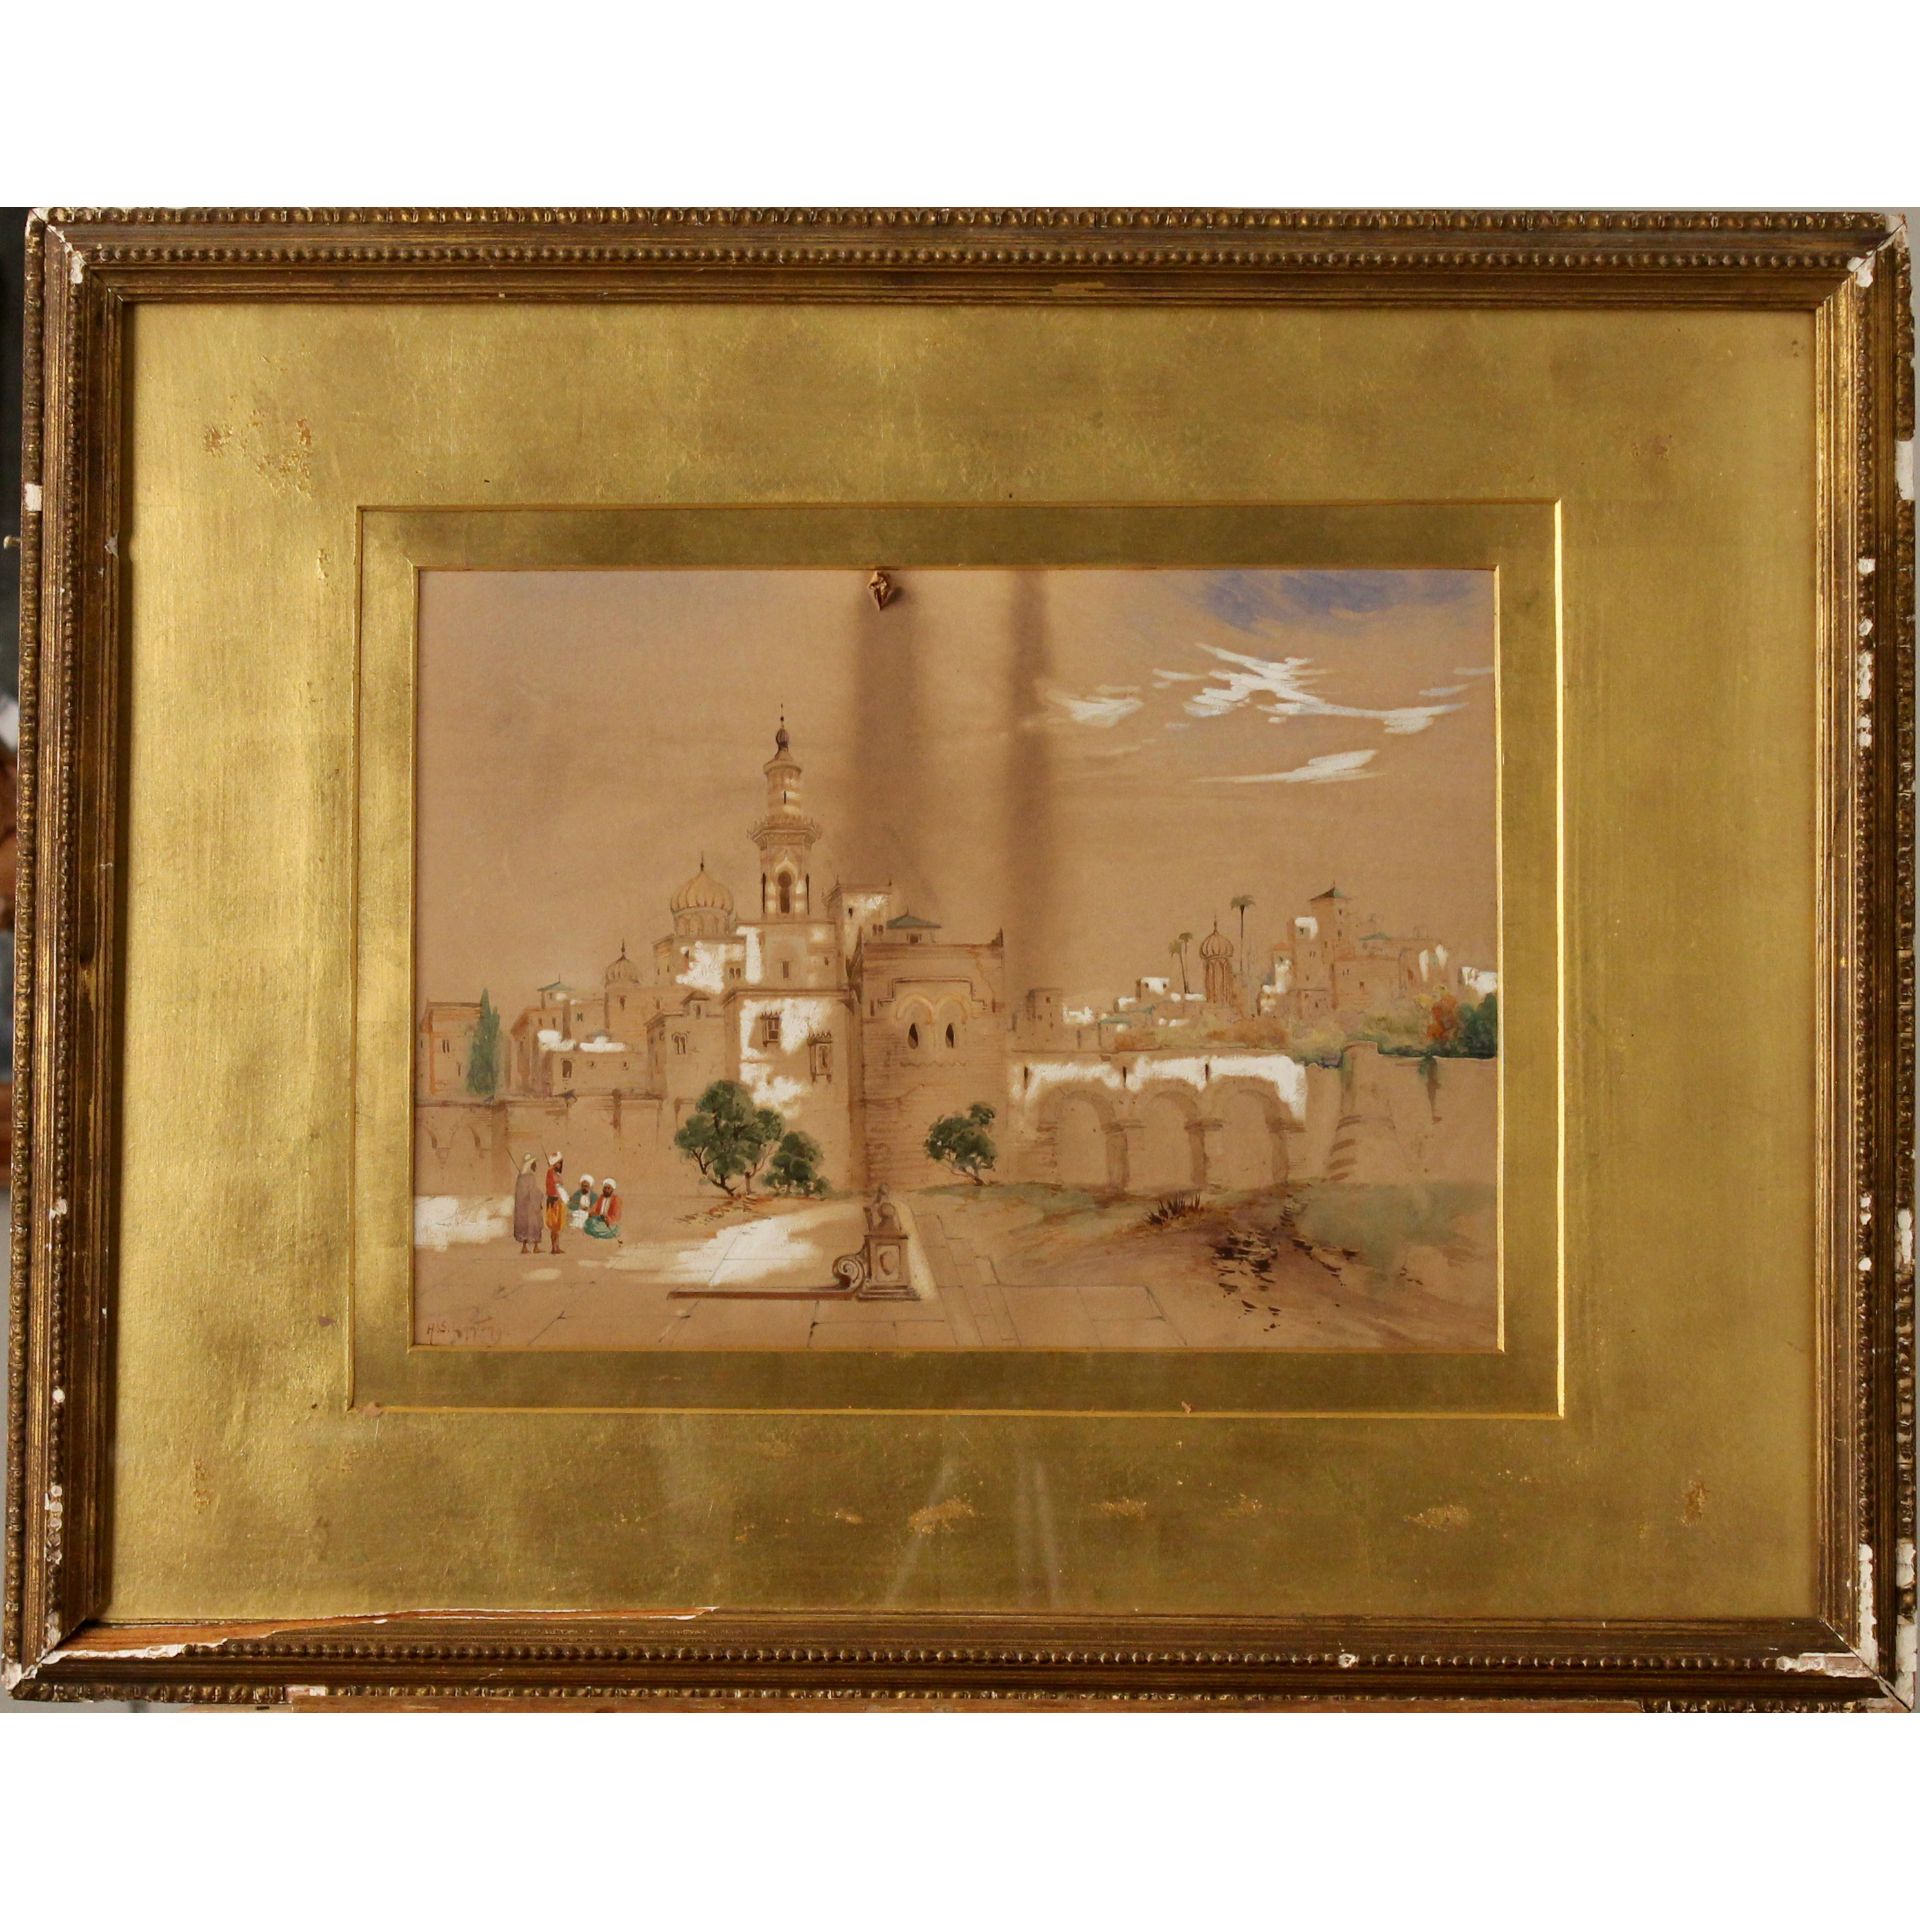 Paesaggi arabi con figure - Arab landscapes with figures - Image 2 of 3